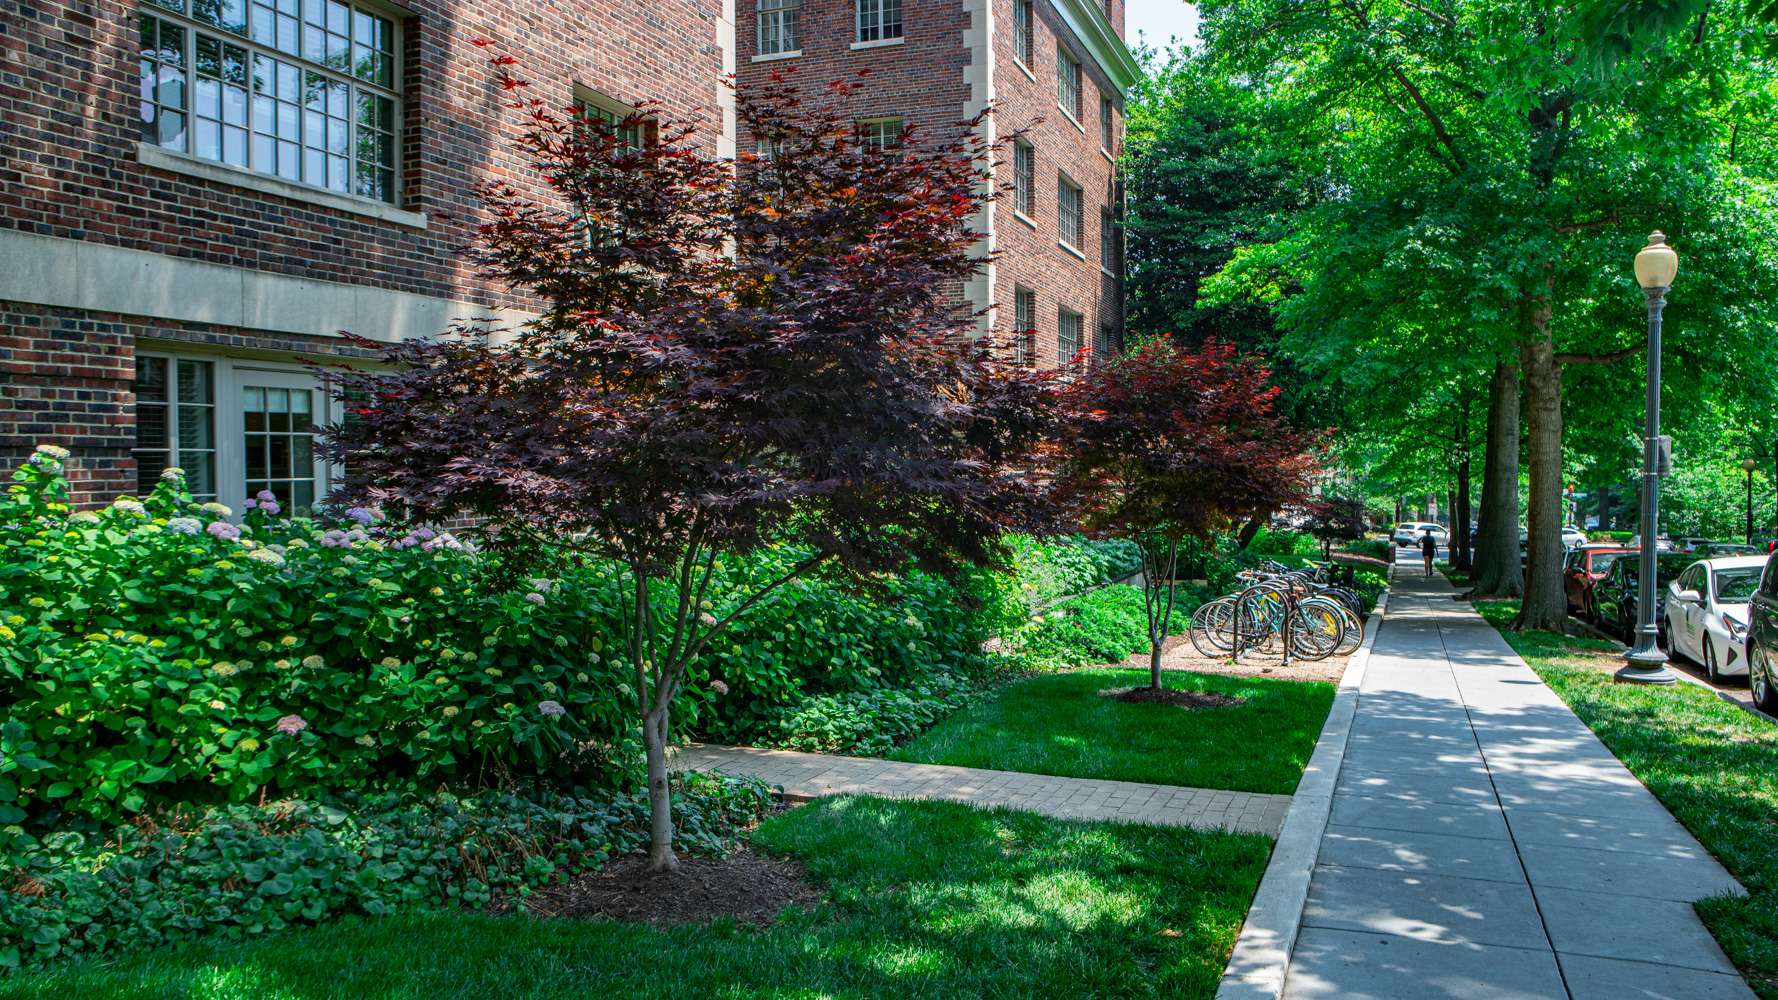 Commercial landscaping university walkway, sidewalk, trees, shrubs, perennials, bicycles